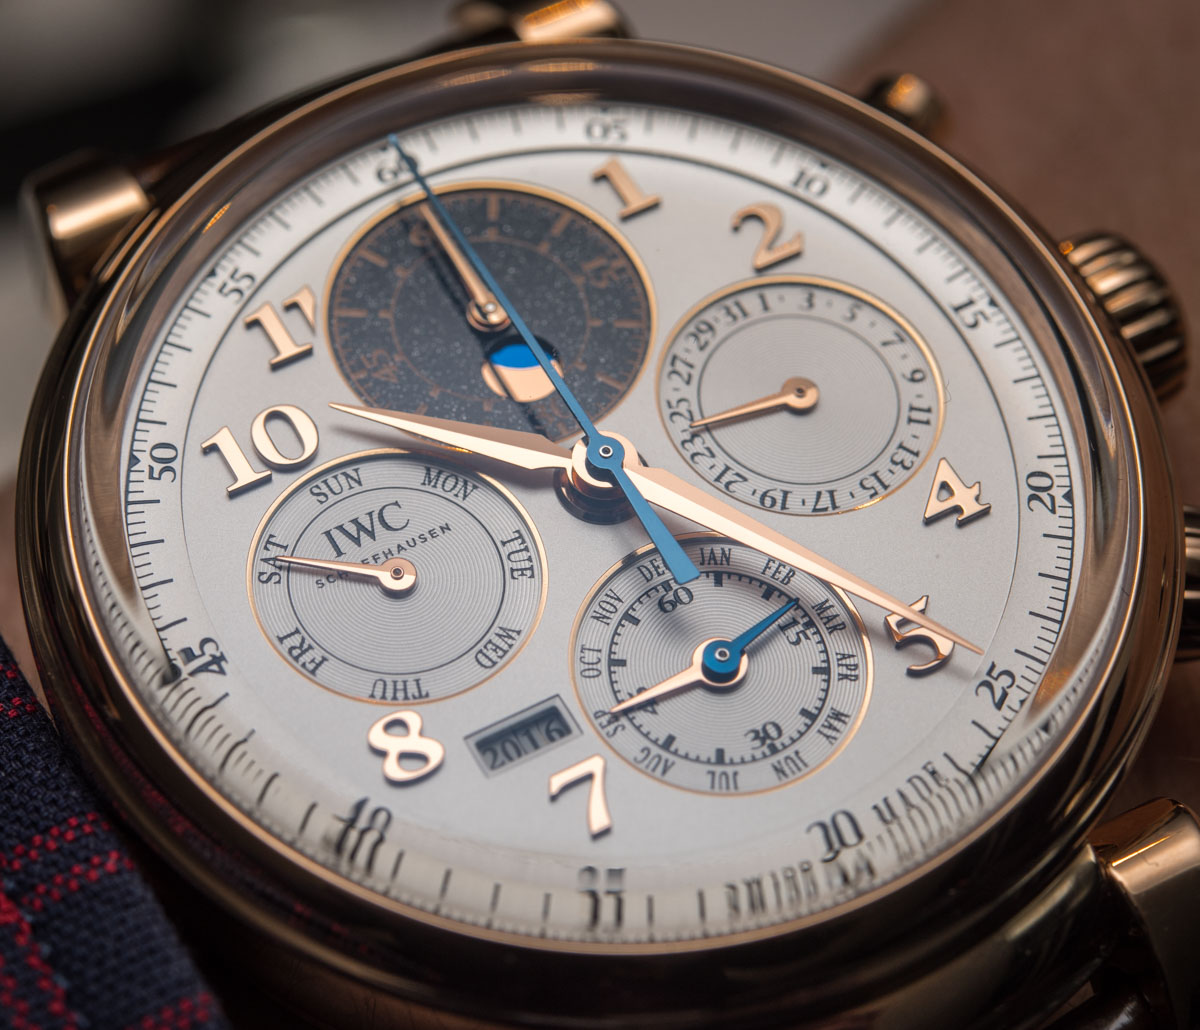 IWC Da Vinci Perpetual Calendar Chronograph Watch Hands-On Hands-On 